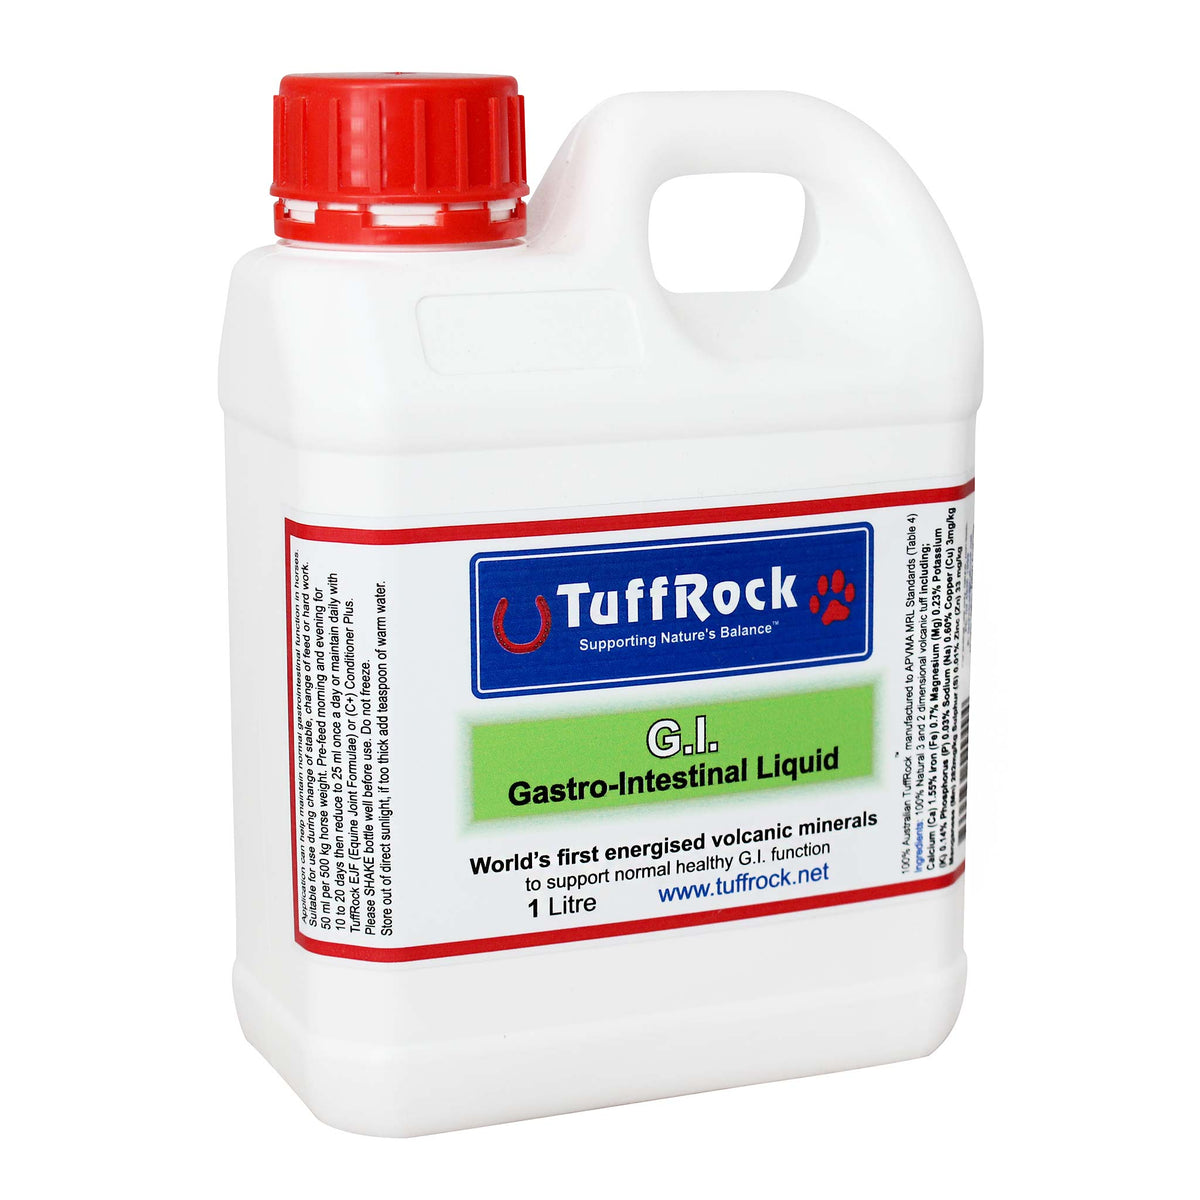 Tuffrock Gastro Intestinal Liquid